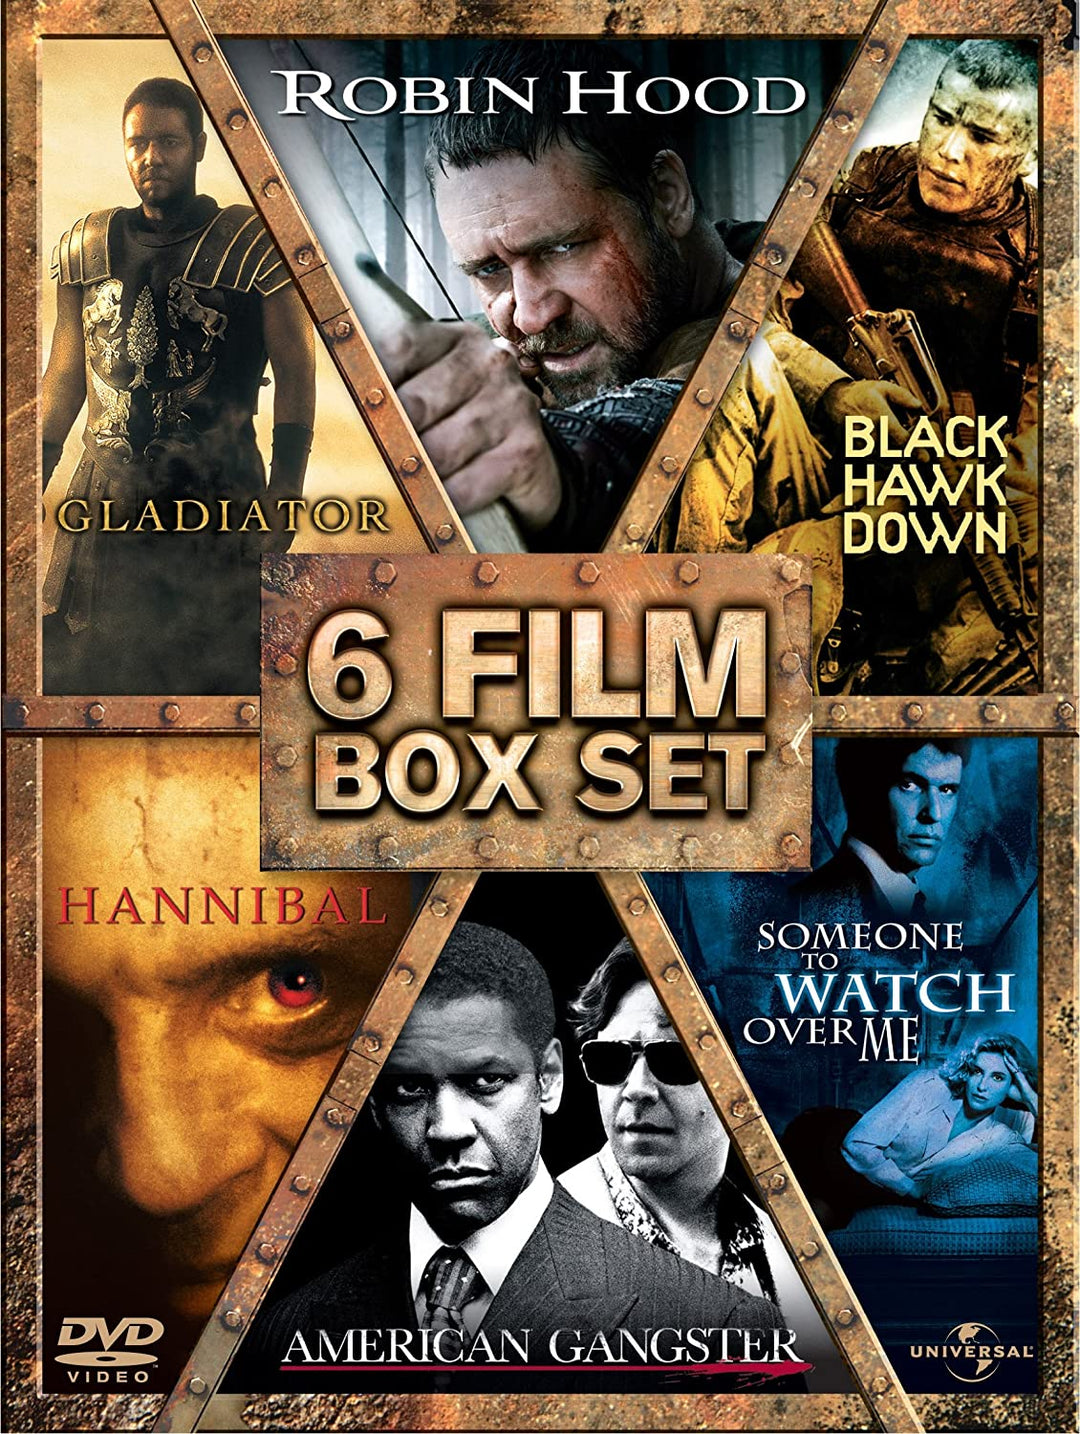 6 Film Box Set: Gladiator/Robin Hood/American Gangster/Hannibal/Black Hawk Down/ [DVD]